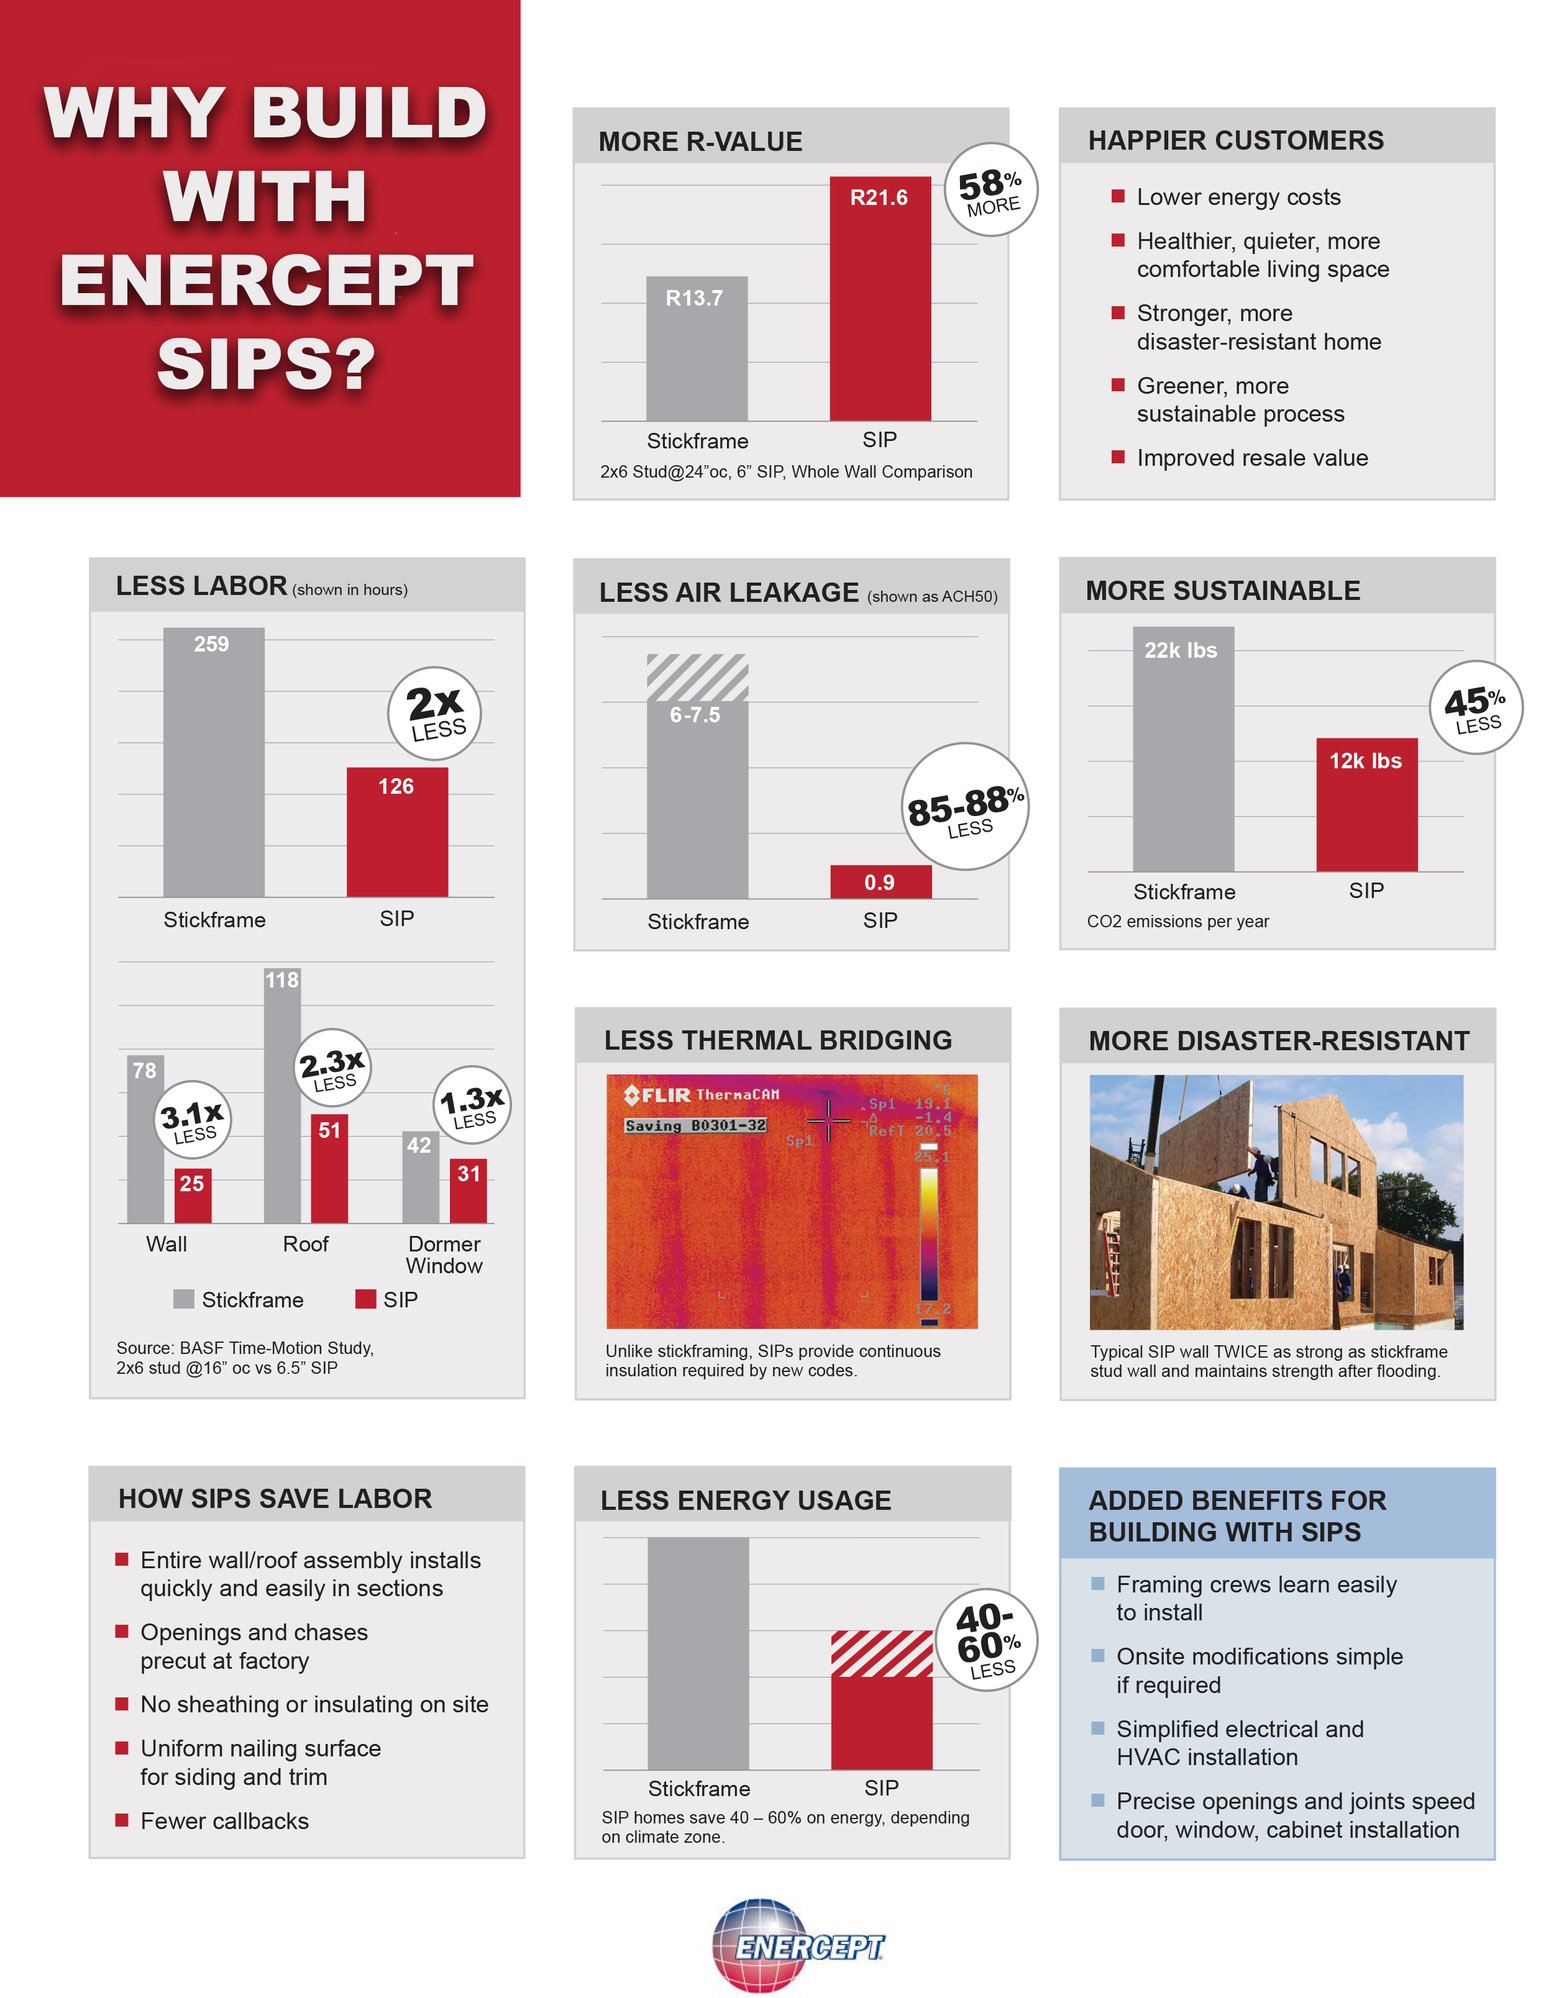 Enercept SIPs -Labor-Savings-brochure-pdf-40-1 copy